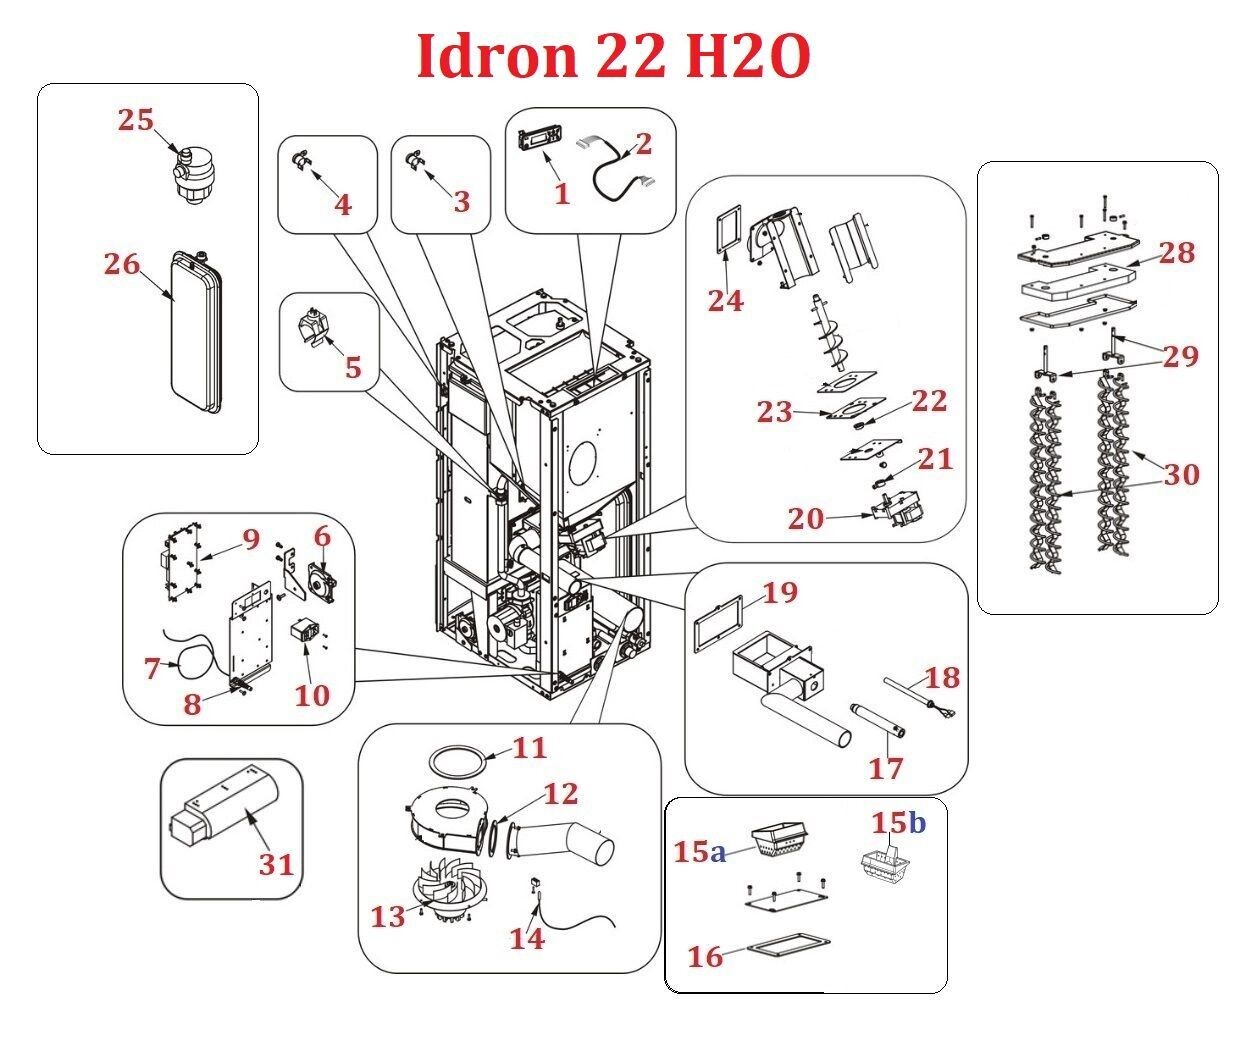 Idron 22 H2O